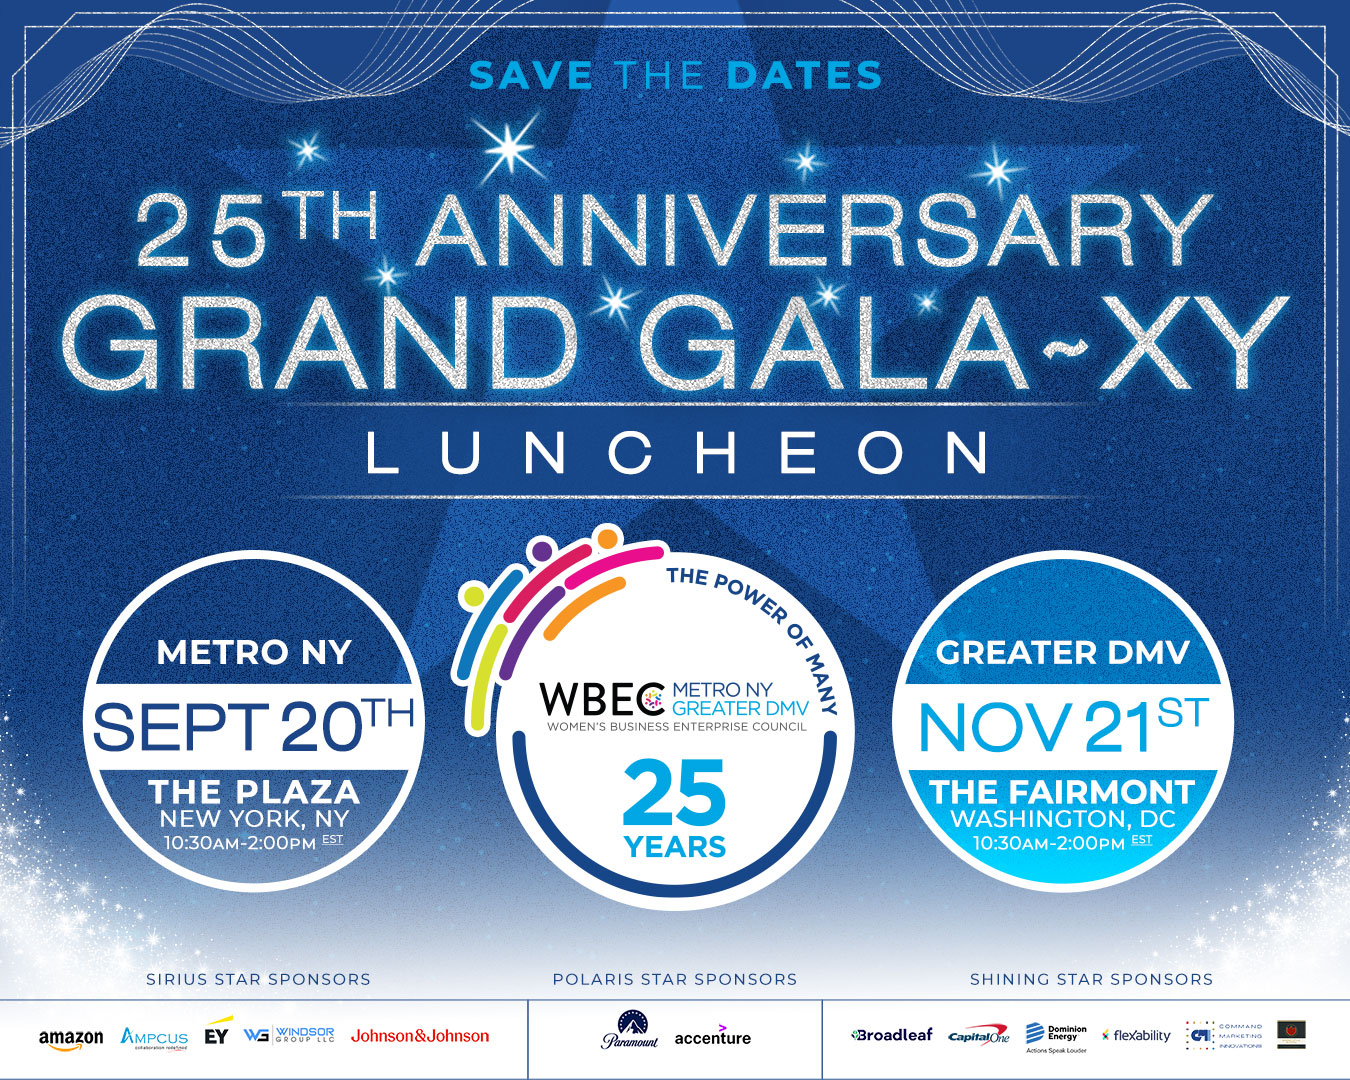 WBEC NY DMV 25th Anniversary Grand Galaxy luncheon: Metro NY: Friday, September 20, 2024, The Plaza Hotel, NY, 10:30am – 2:00pm EST. Greater DMV: Thursday November 21, 2024, The Fairmont Downtown, DC, 10:30am – 2:00pm EST